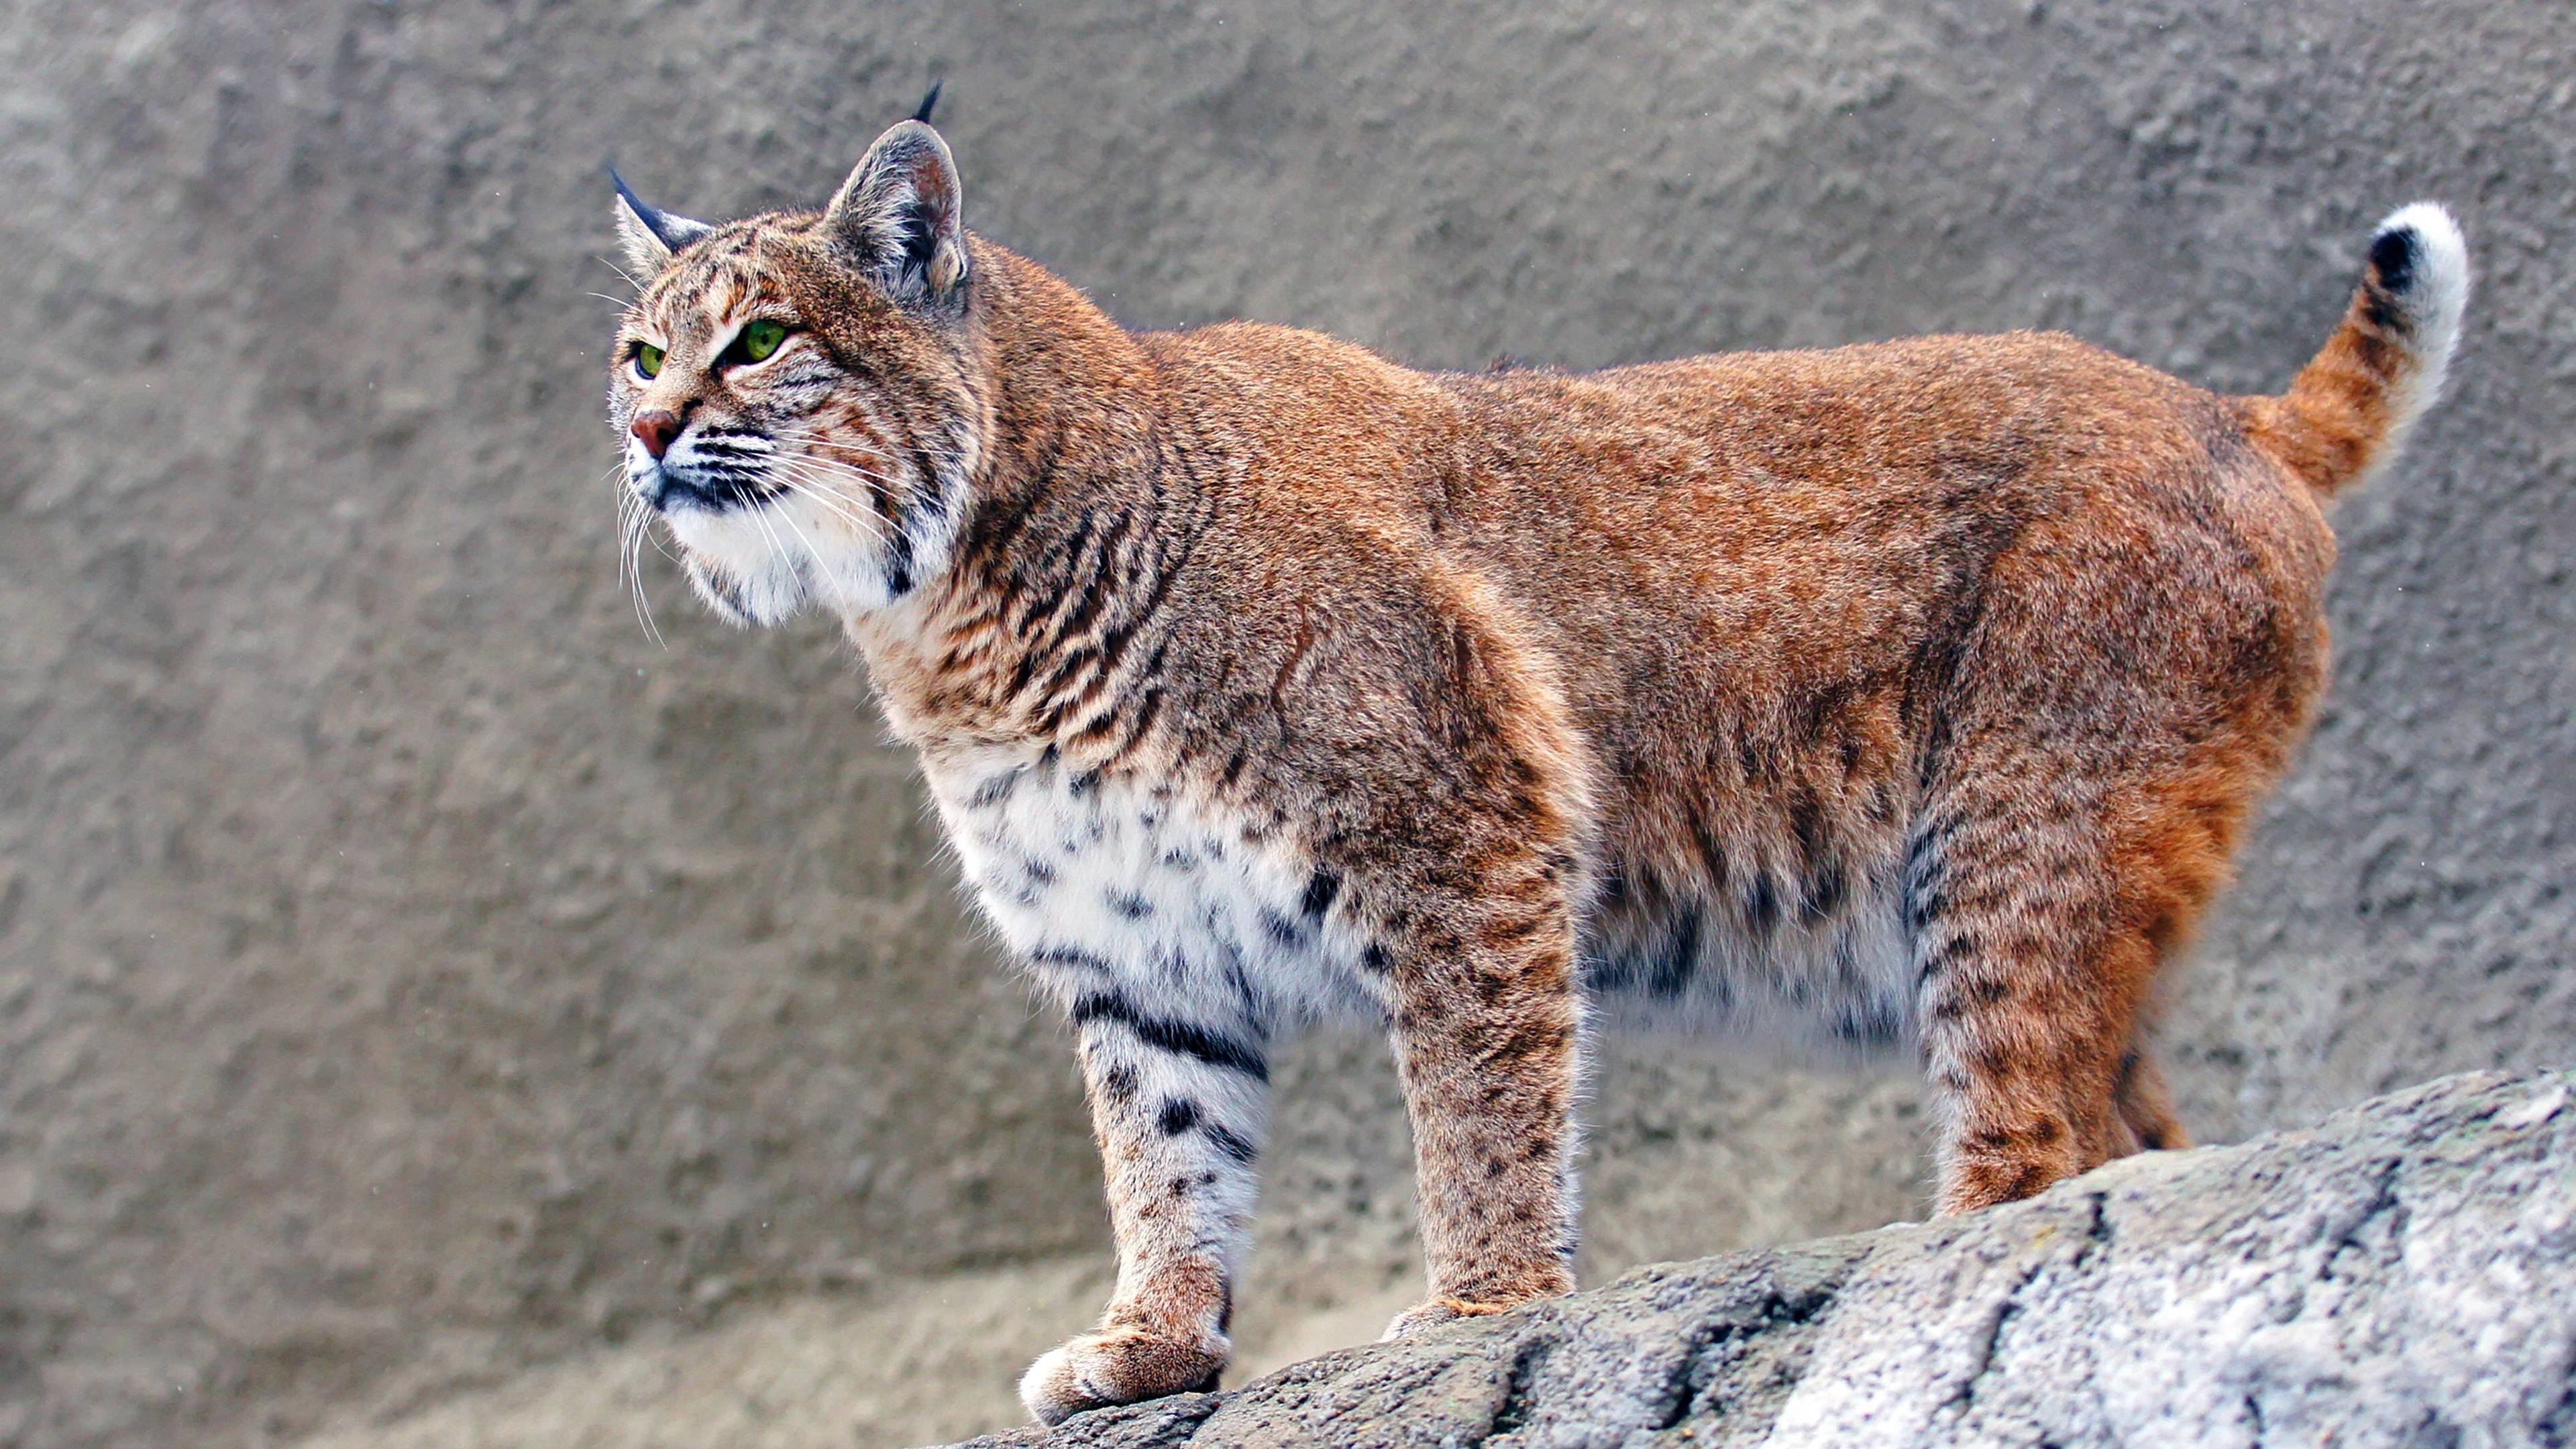 Majestic lynx, Captivating wallpaper, Wild feline, Nature's beauty, 3840x2160 4K Desktop